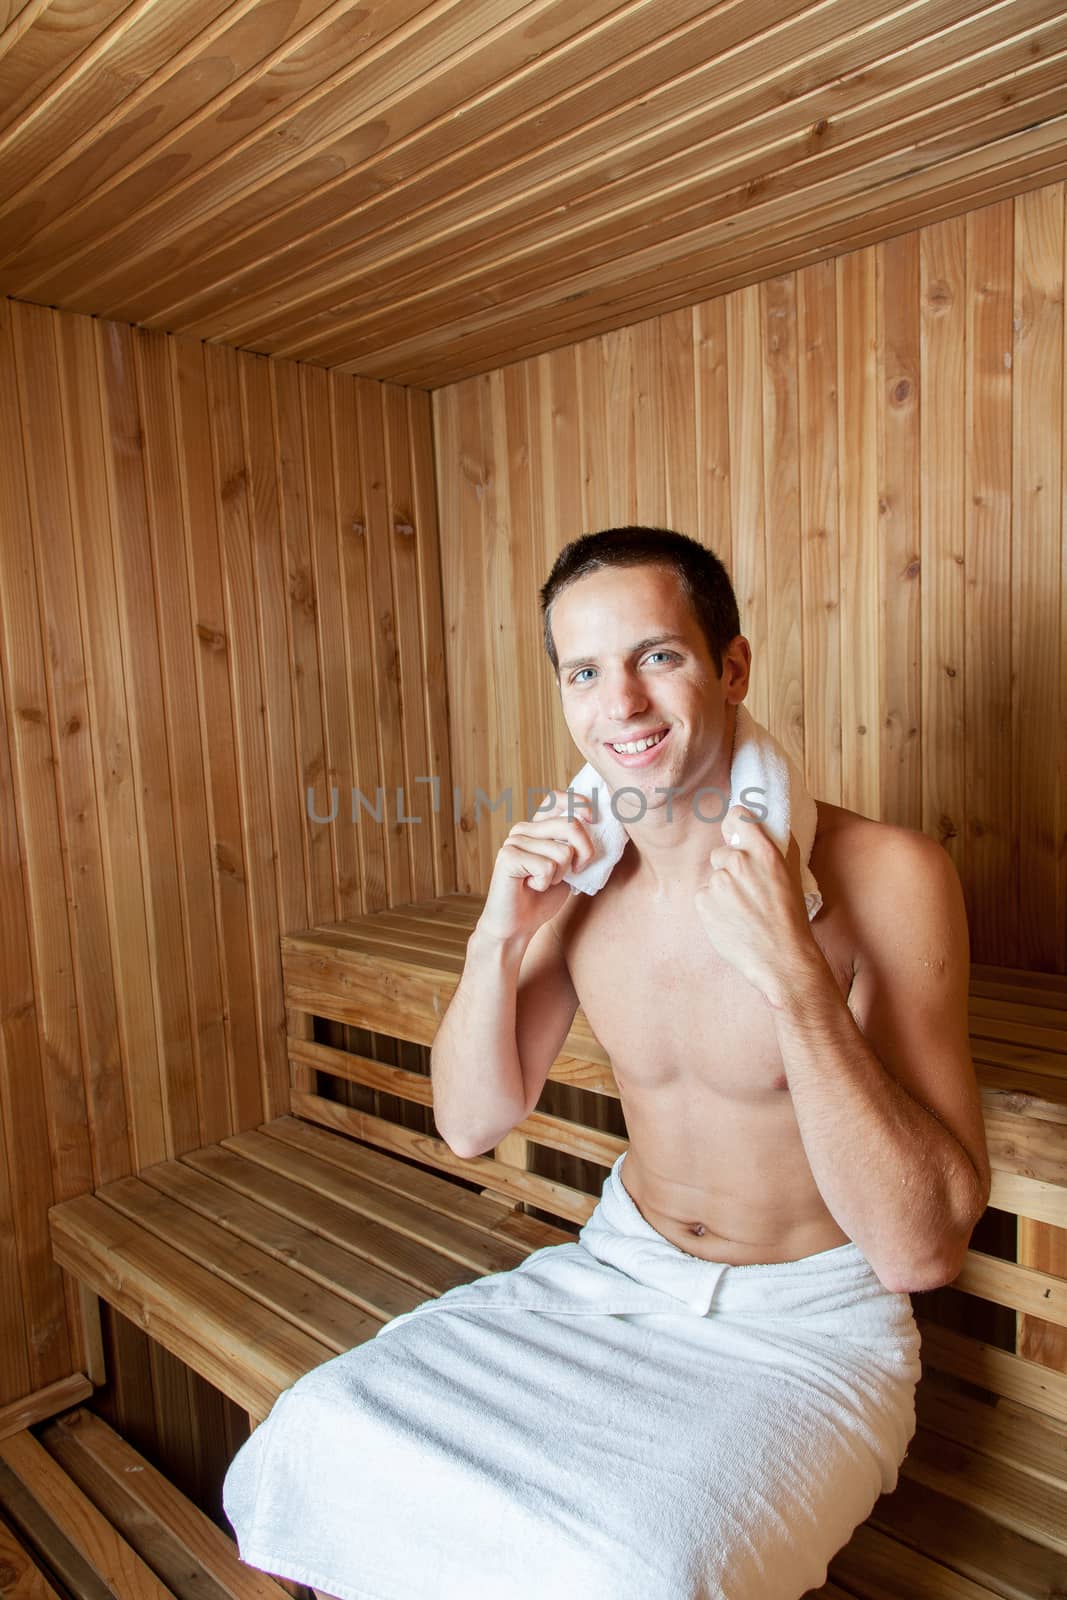 Happy man inside the sauna